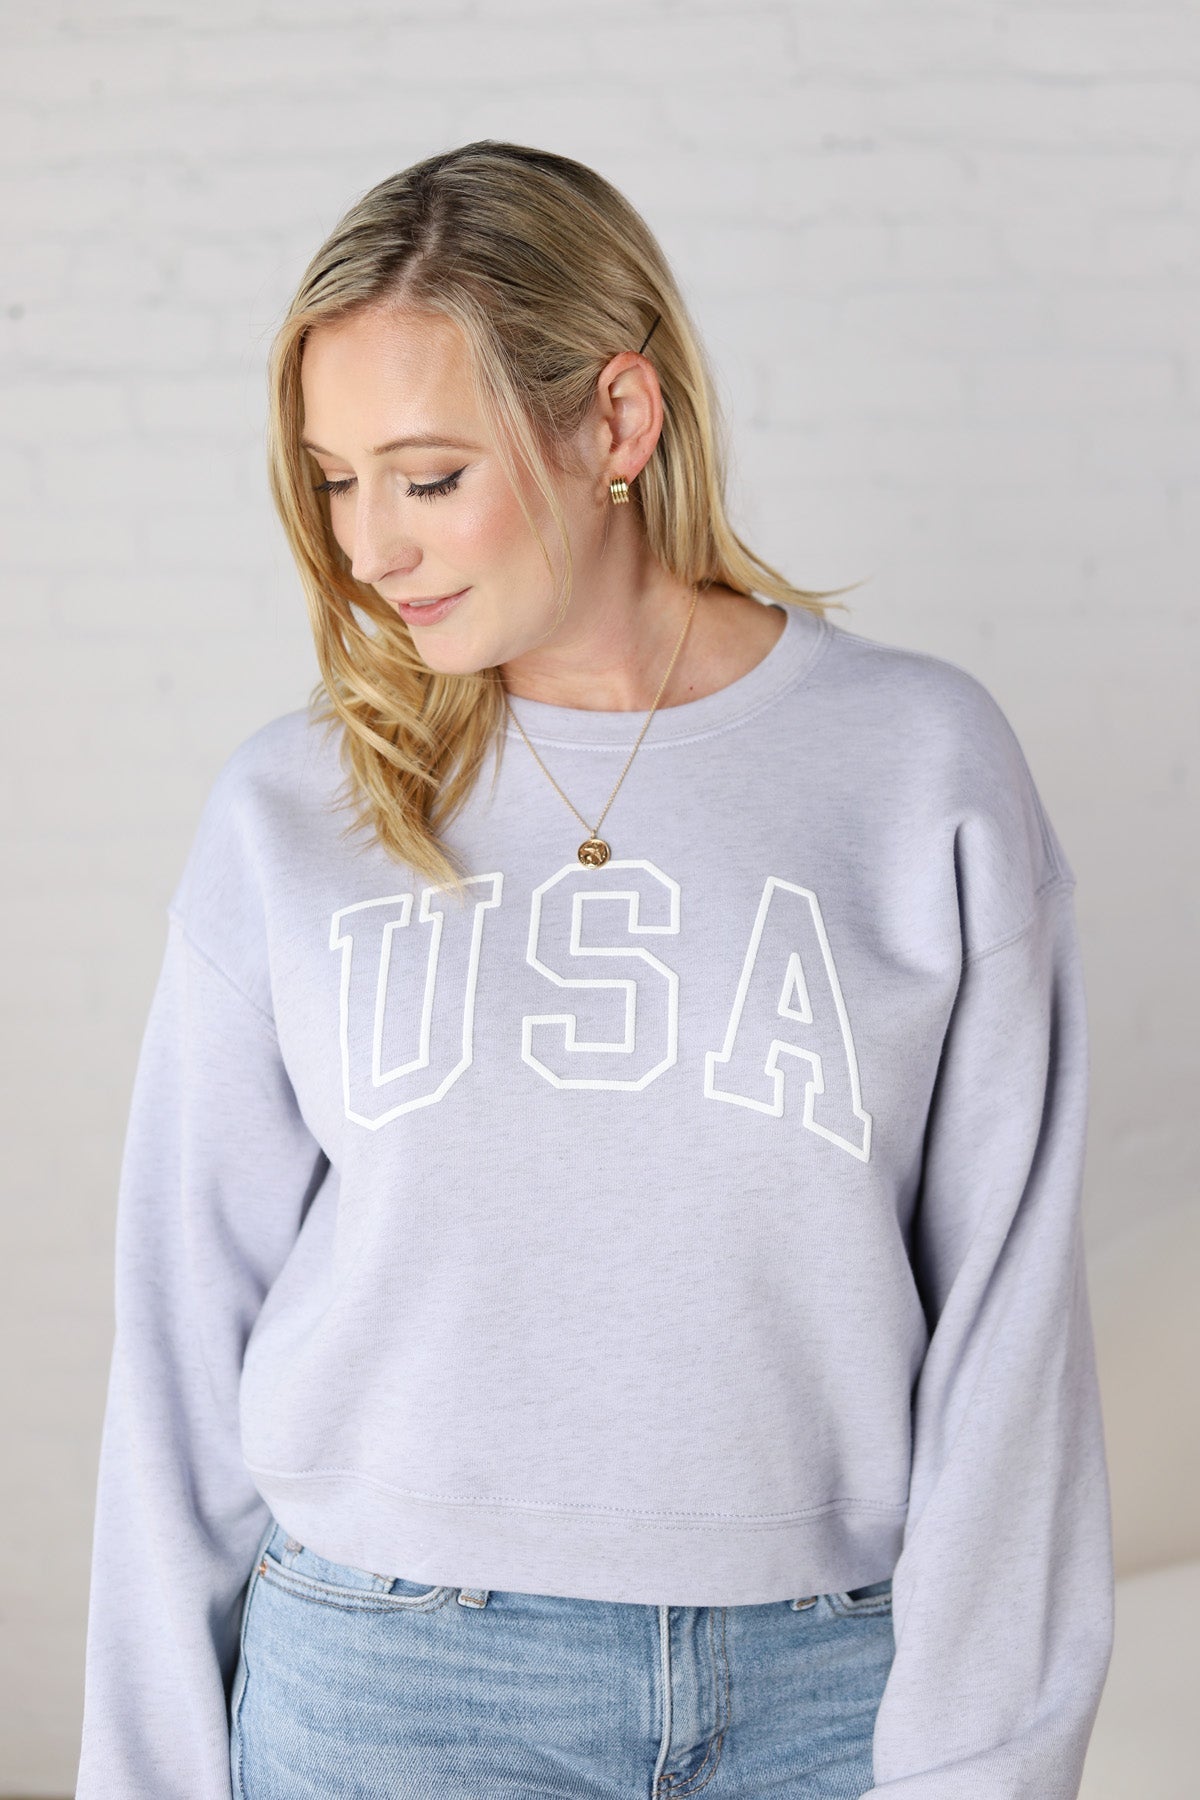 USA Puff Graphic Sweatshirt - Light Blue